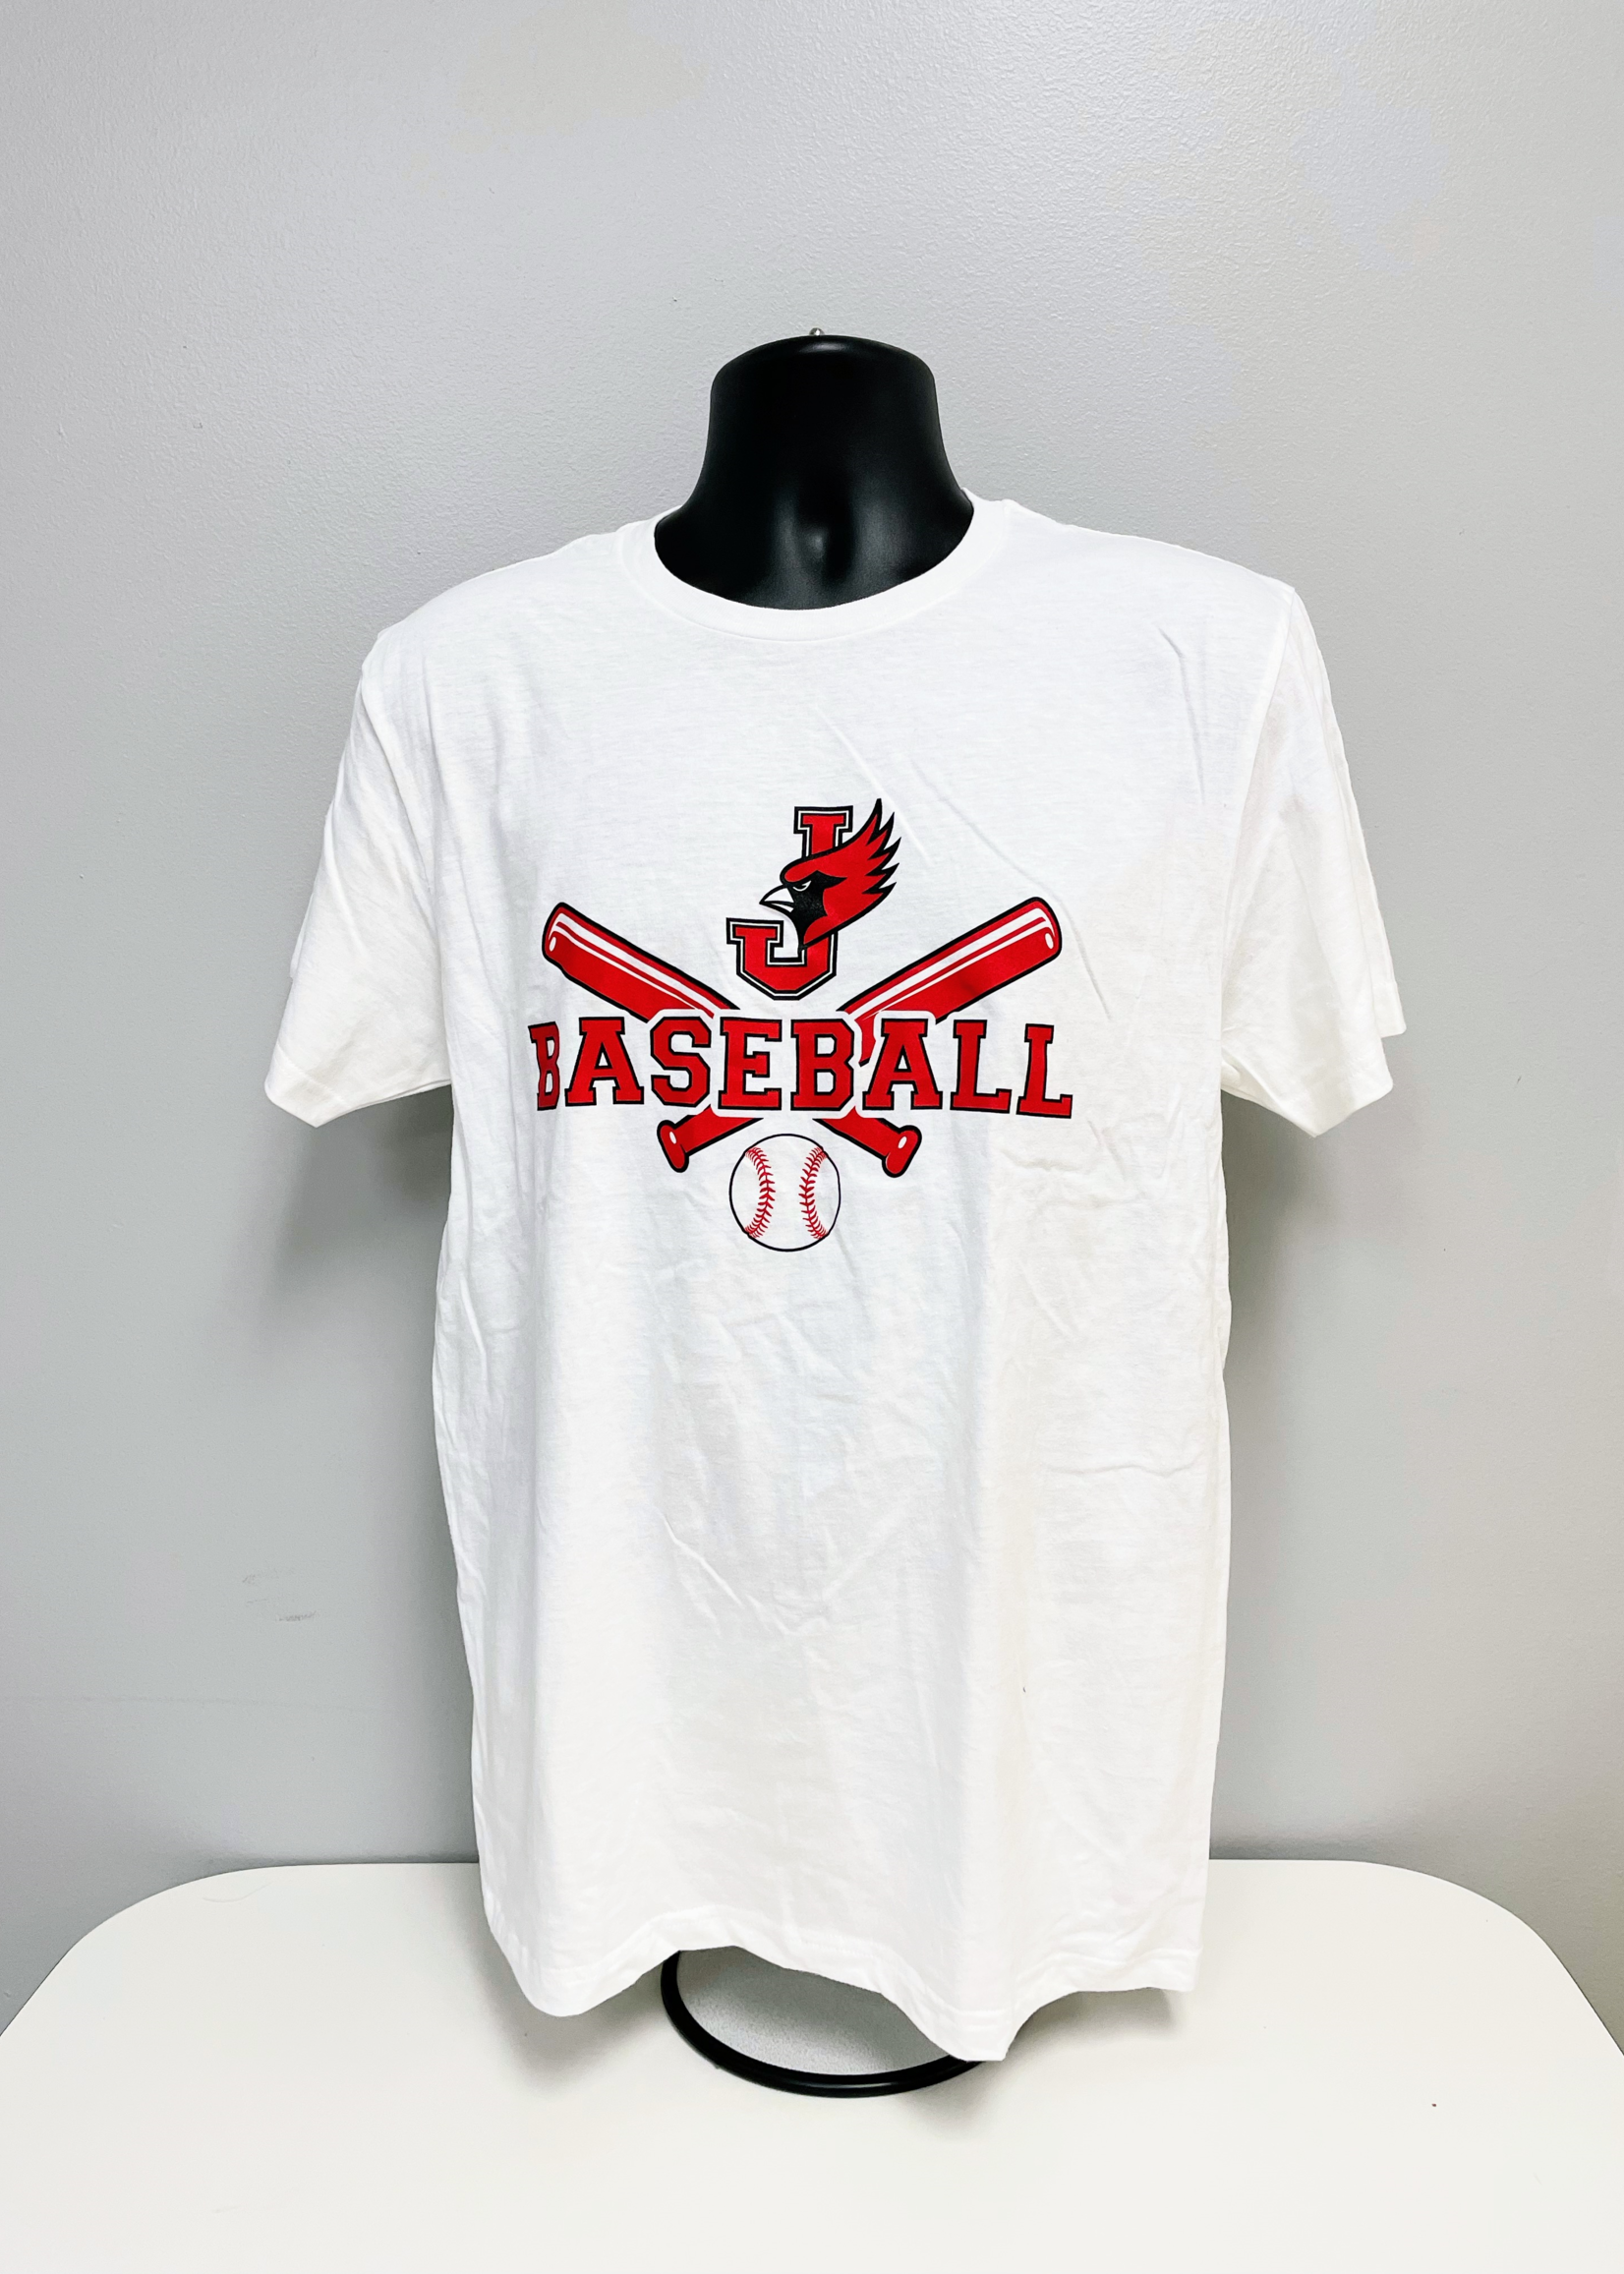 Jewell Baseball Bats 2 colors logo t-shirt